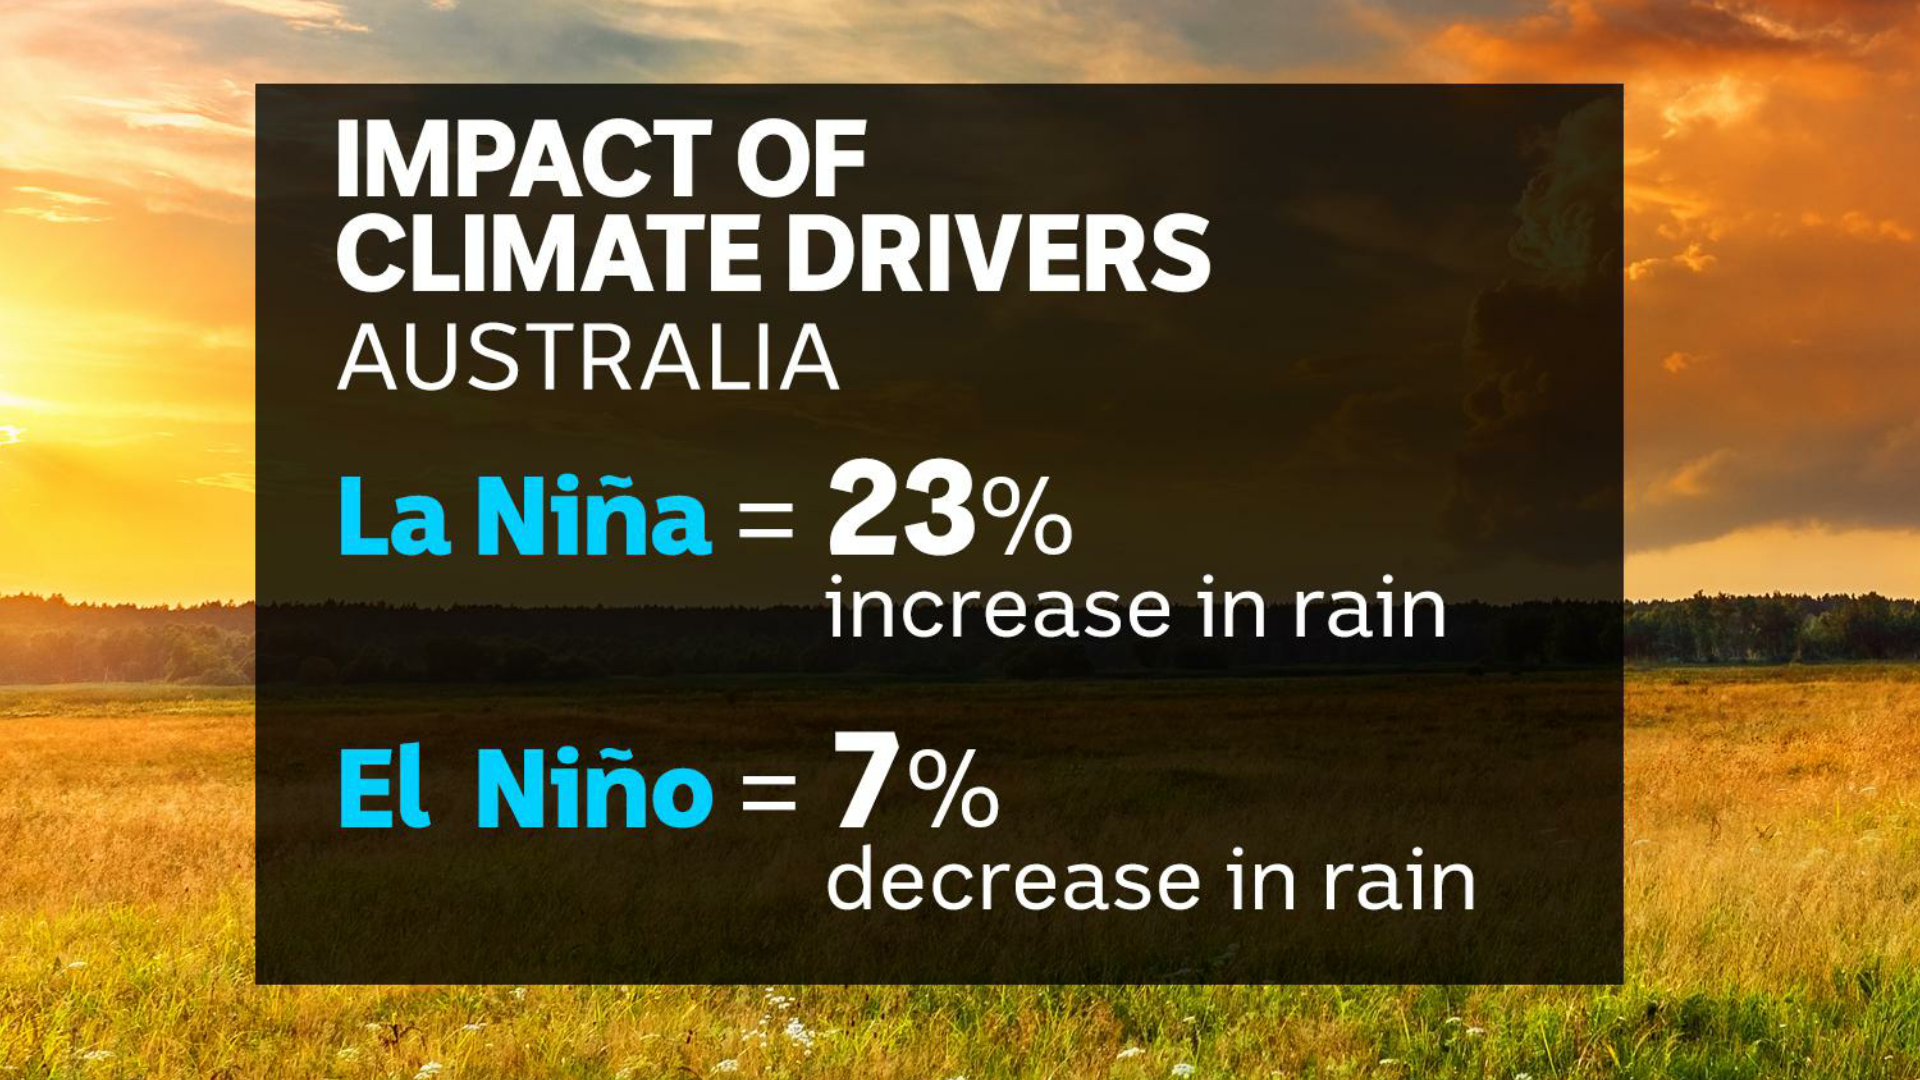 a data map showing the la nina and el nino impact as climate drivers